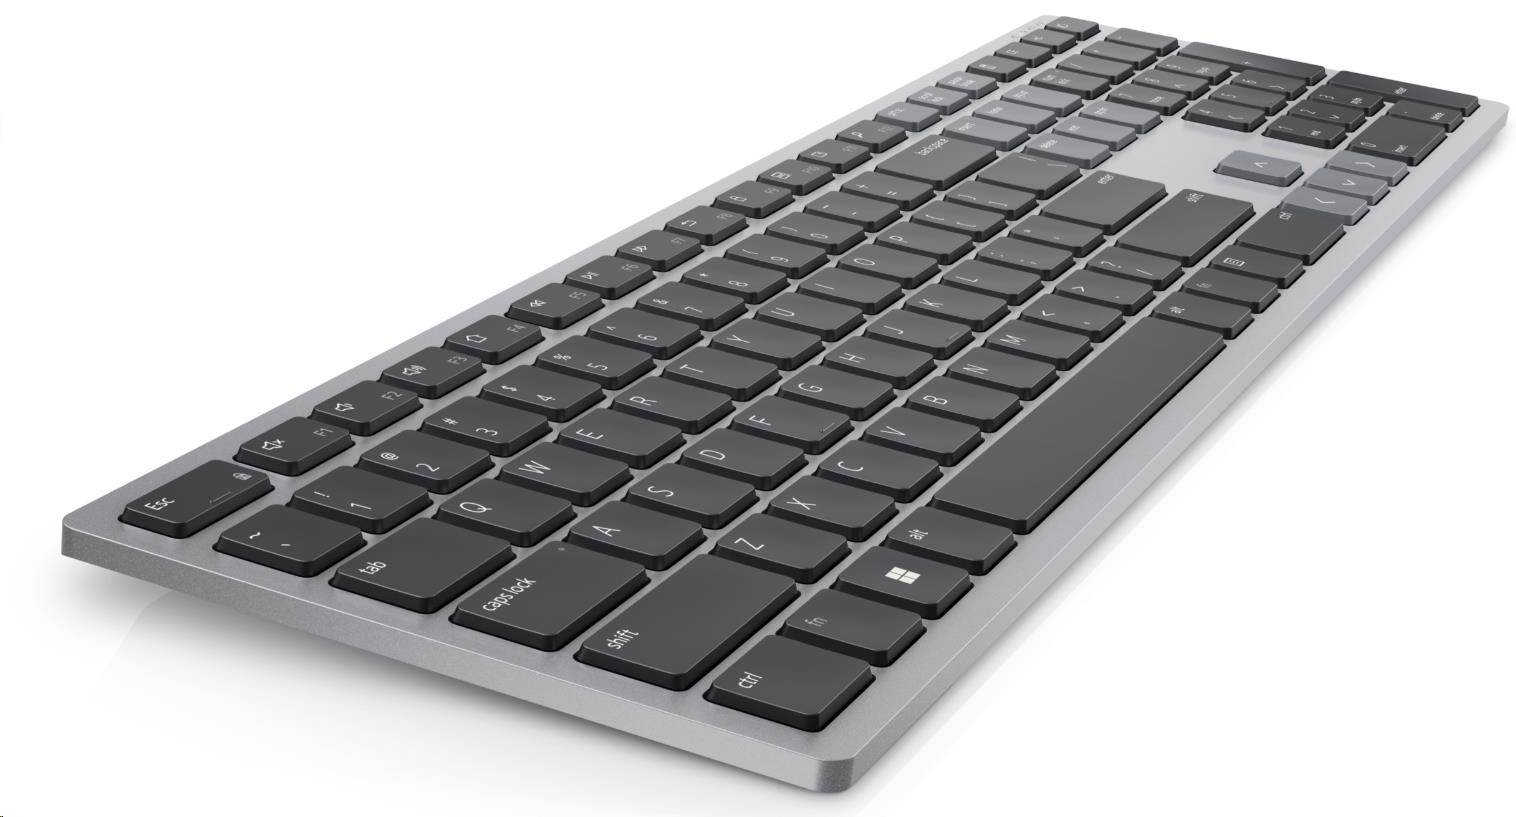 Dell Multi-Device Wireless Keyboard - KB700 - Hungarian (QWERTZ)1 